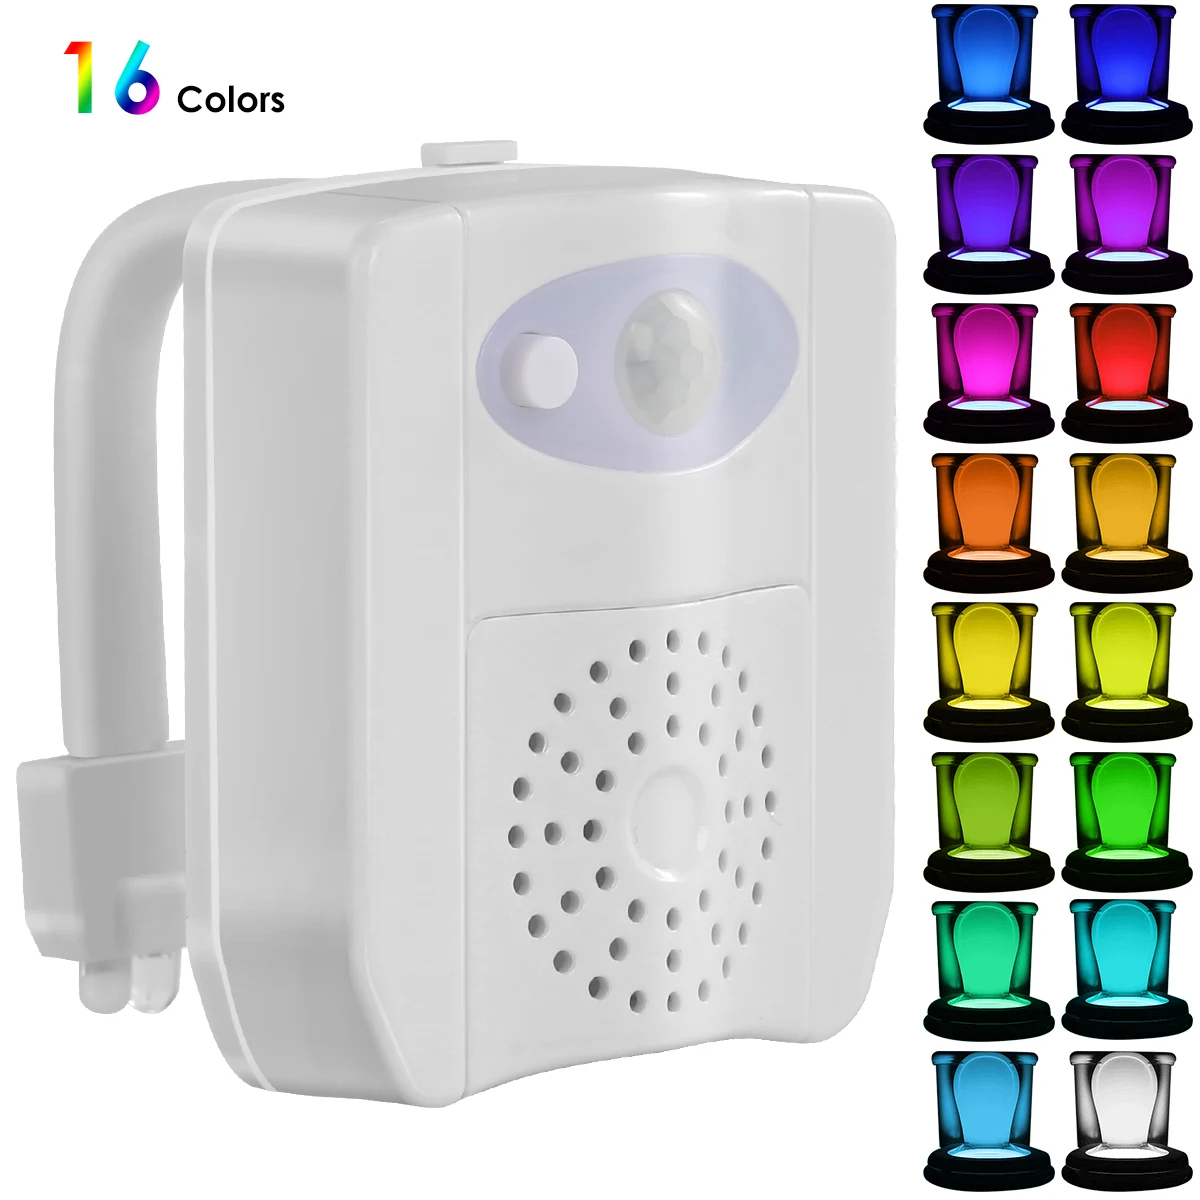 

0.1W 16 Colors LED UV Sterilization Toilet Light Color Changing Motion Sensor Activated Toilet Bowl Night Lamp